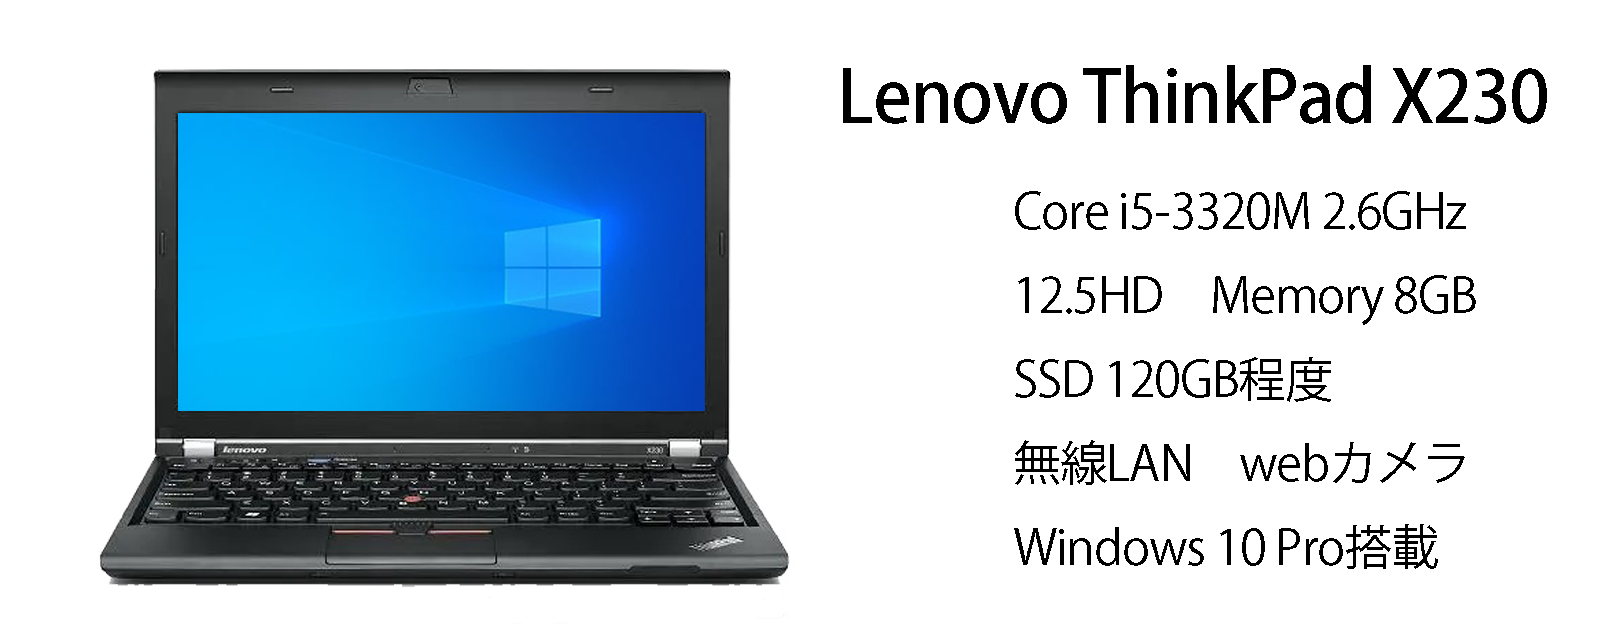 ThinkPad X230